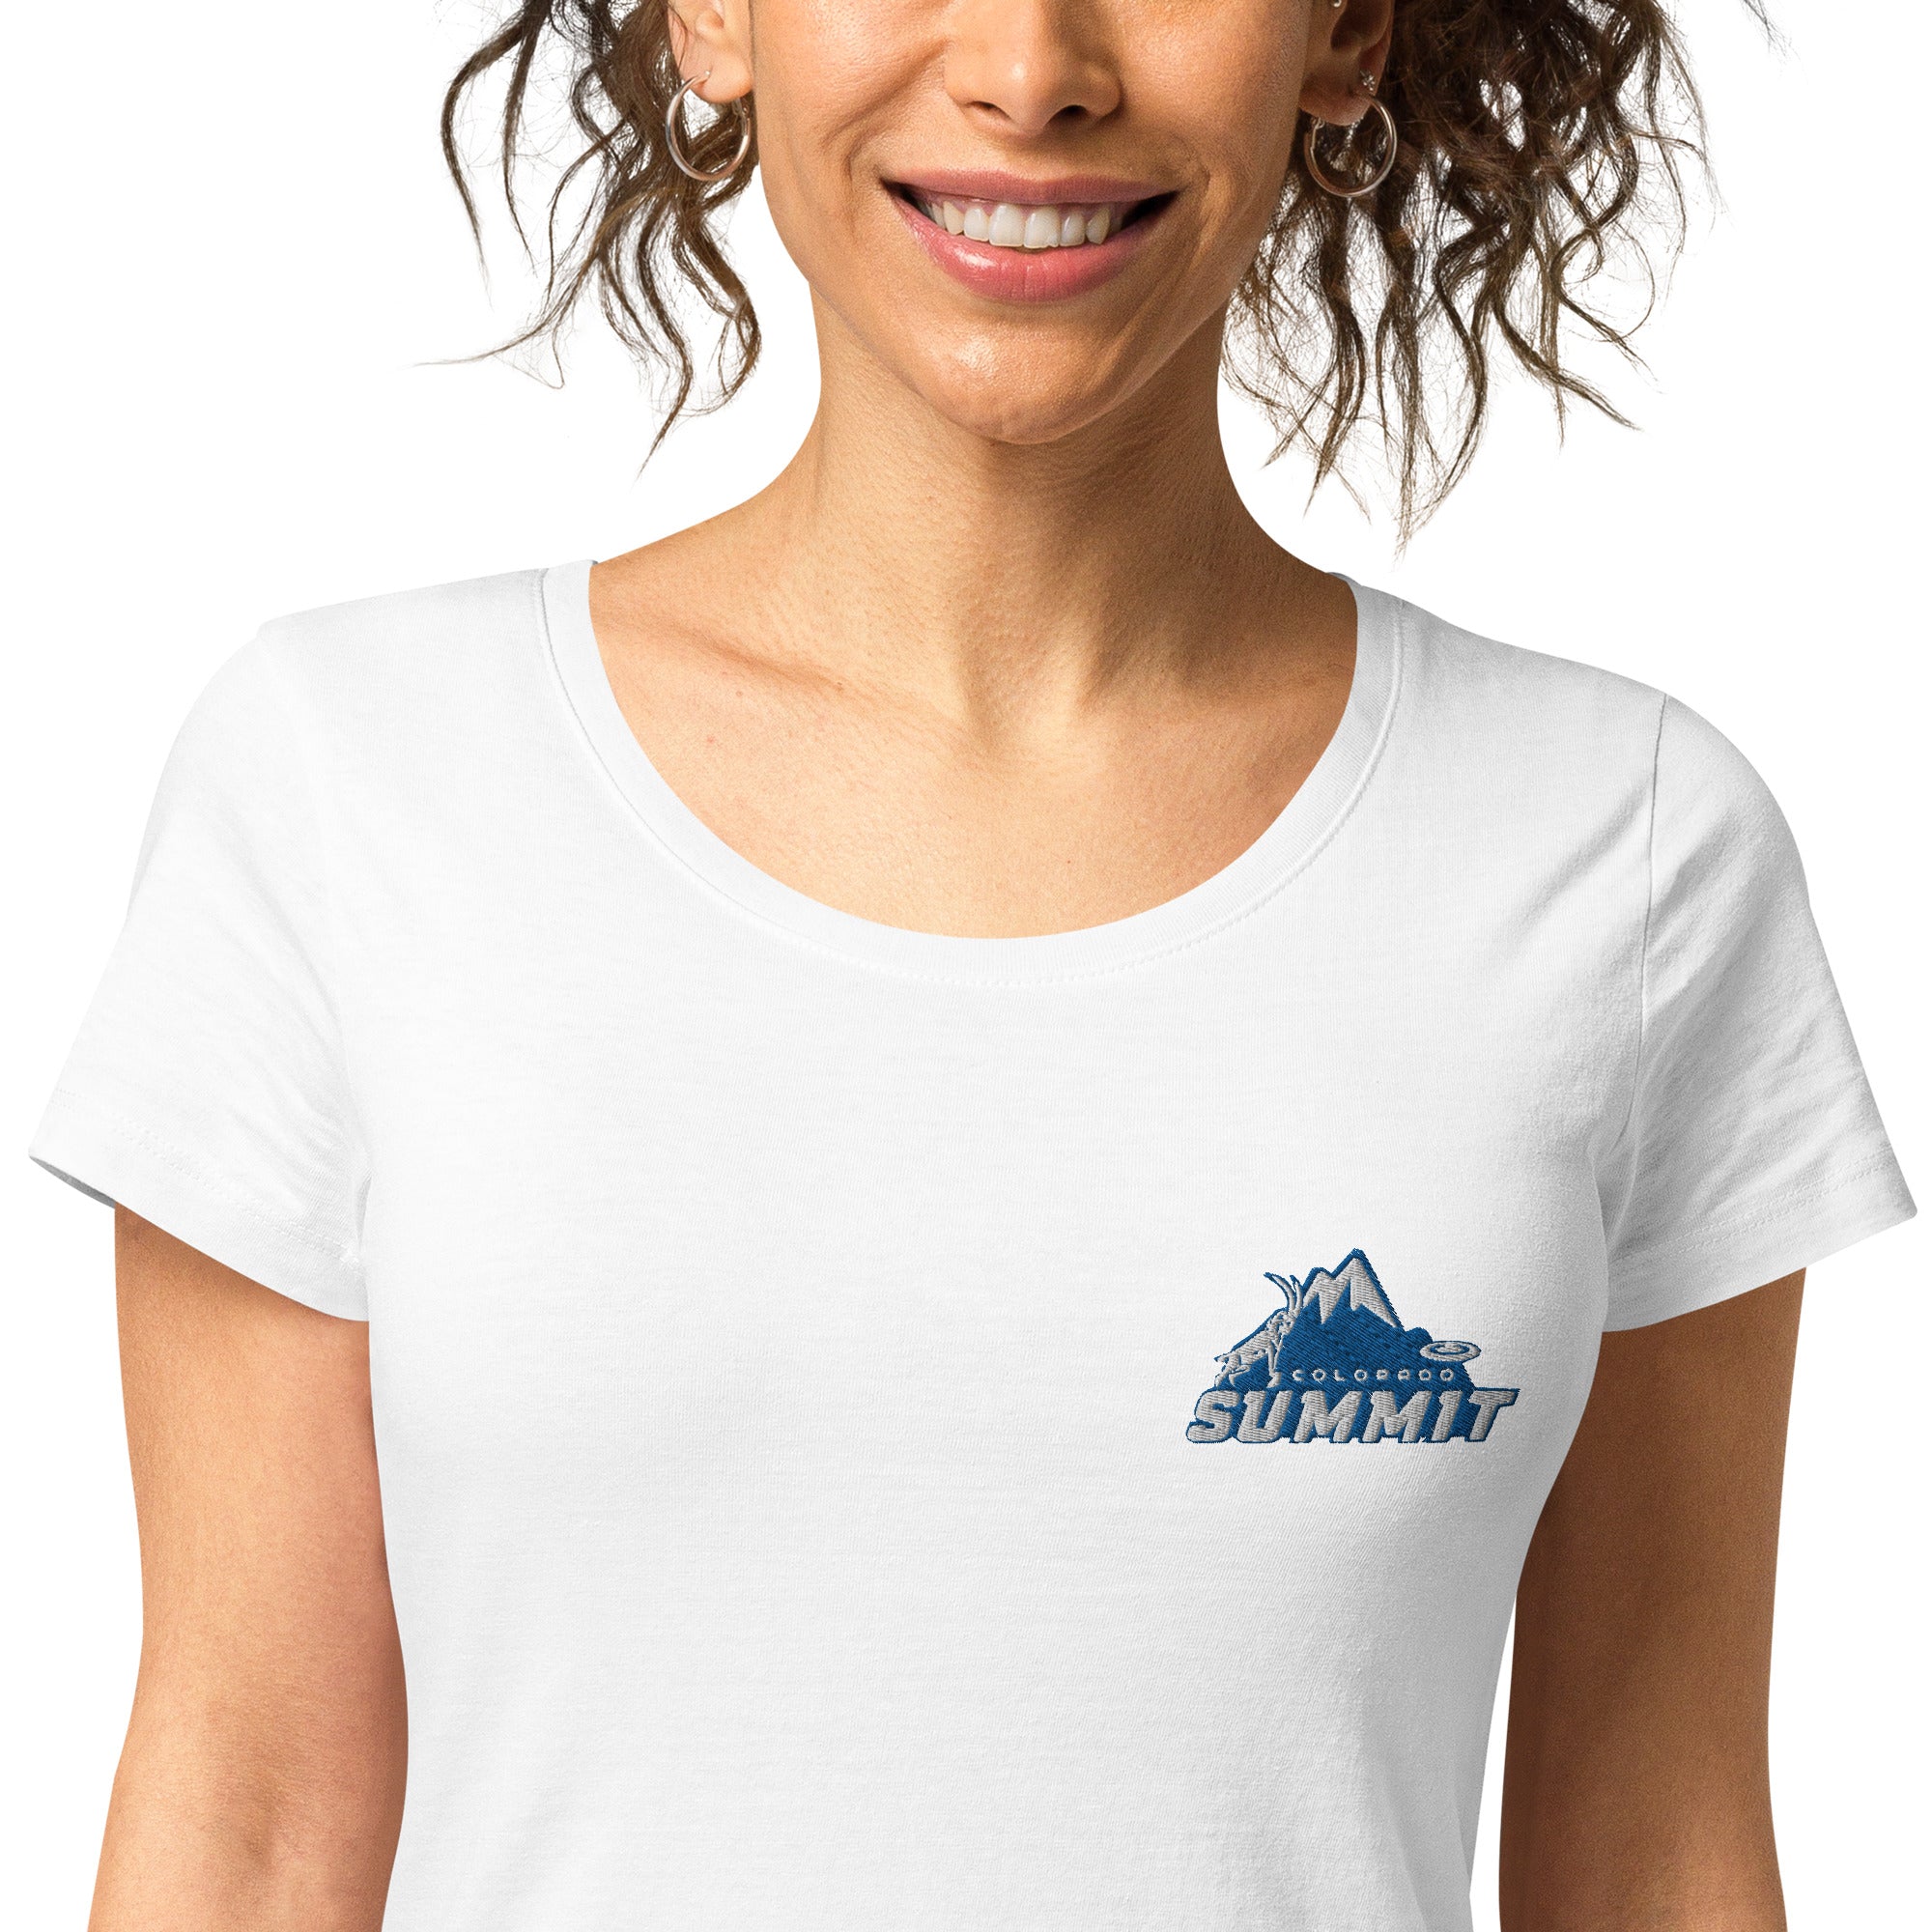 Women’s Colorado Summit organic t-shirt